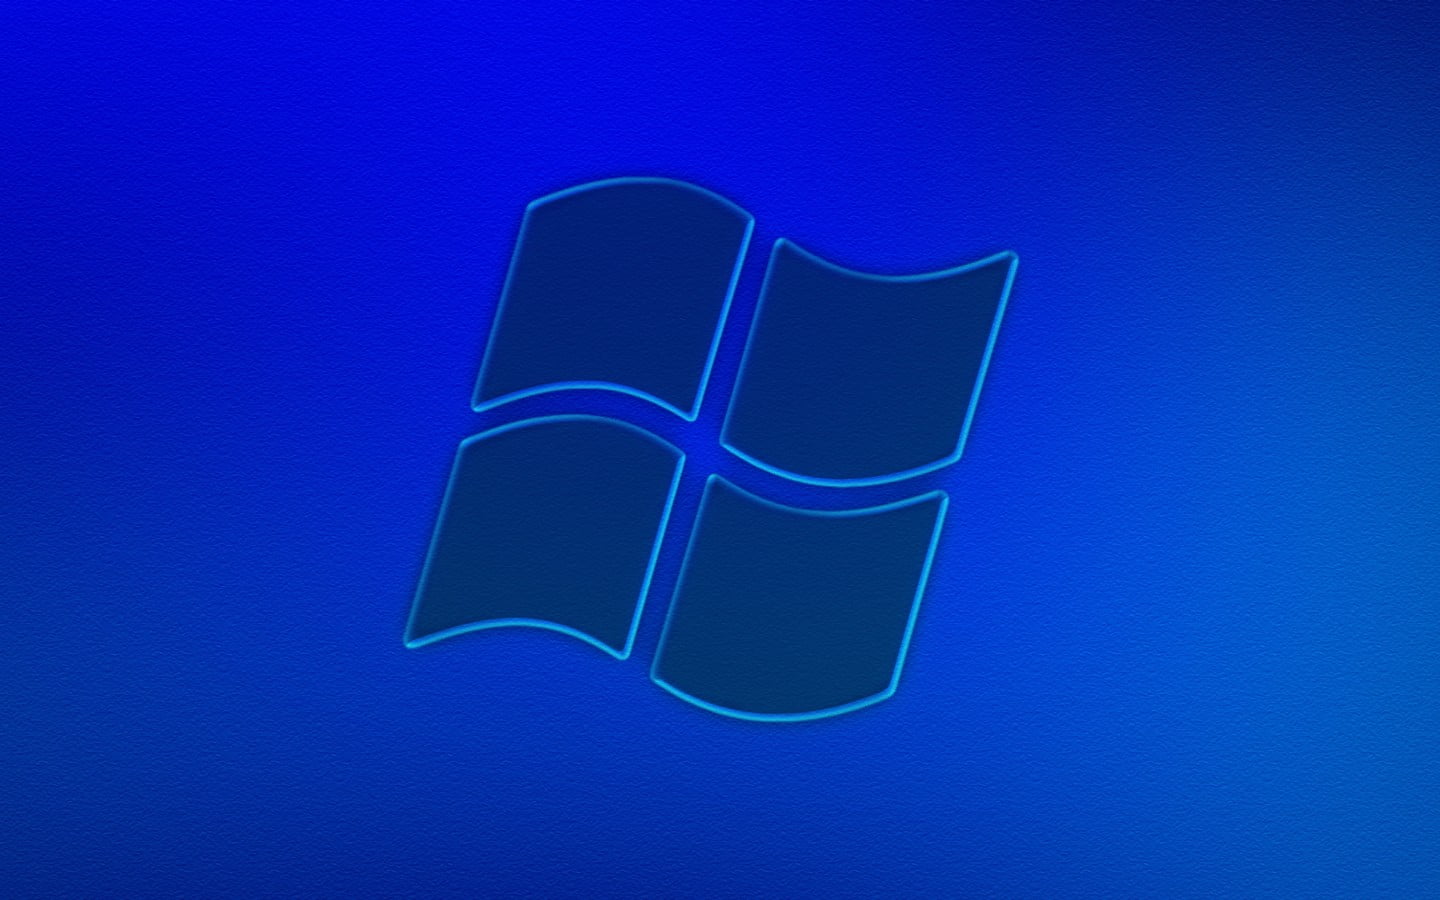 Microsoft Windows logo, blue, studio shot, blue background, colored background